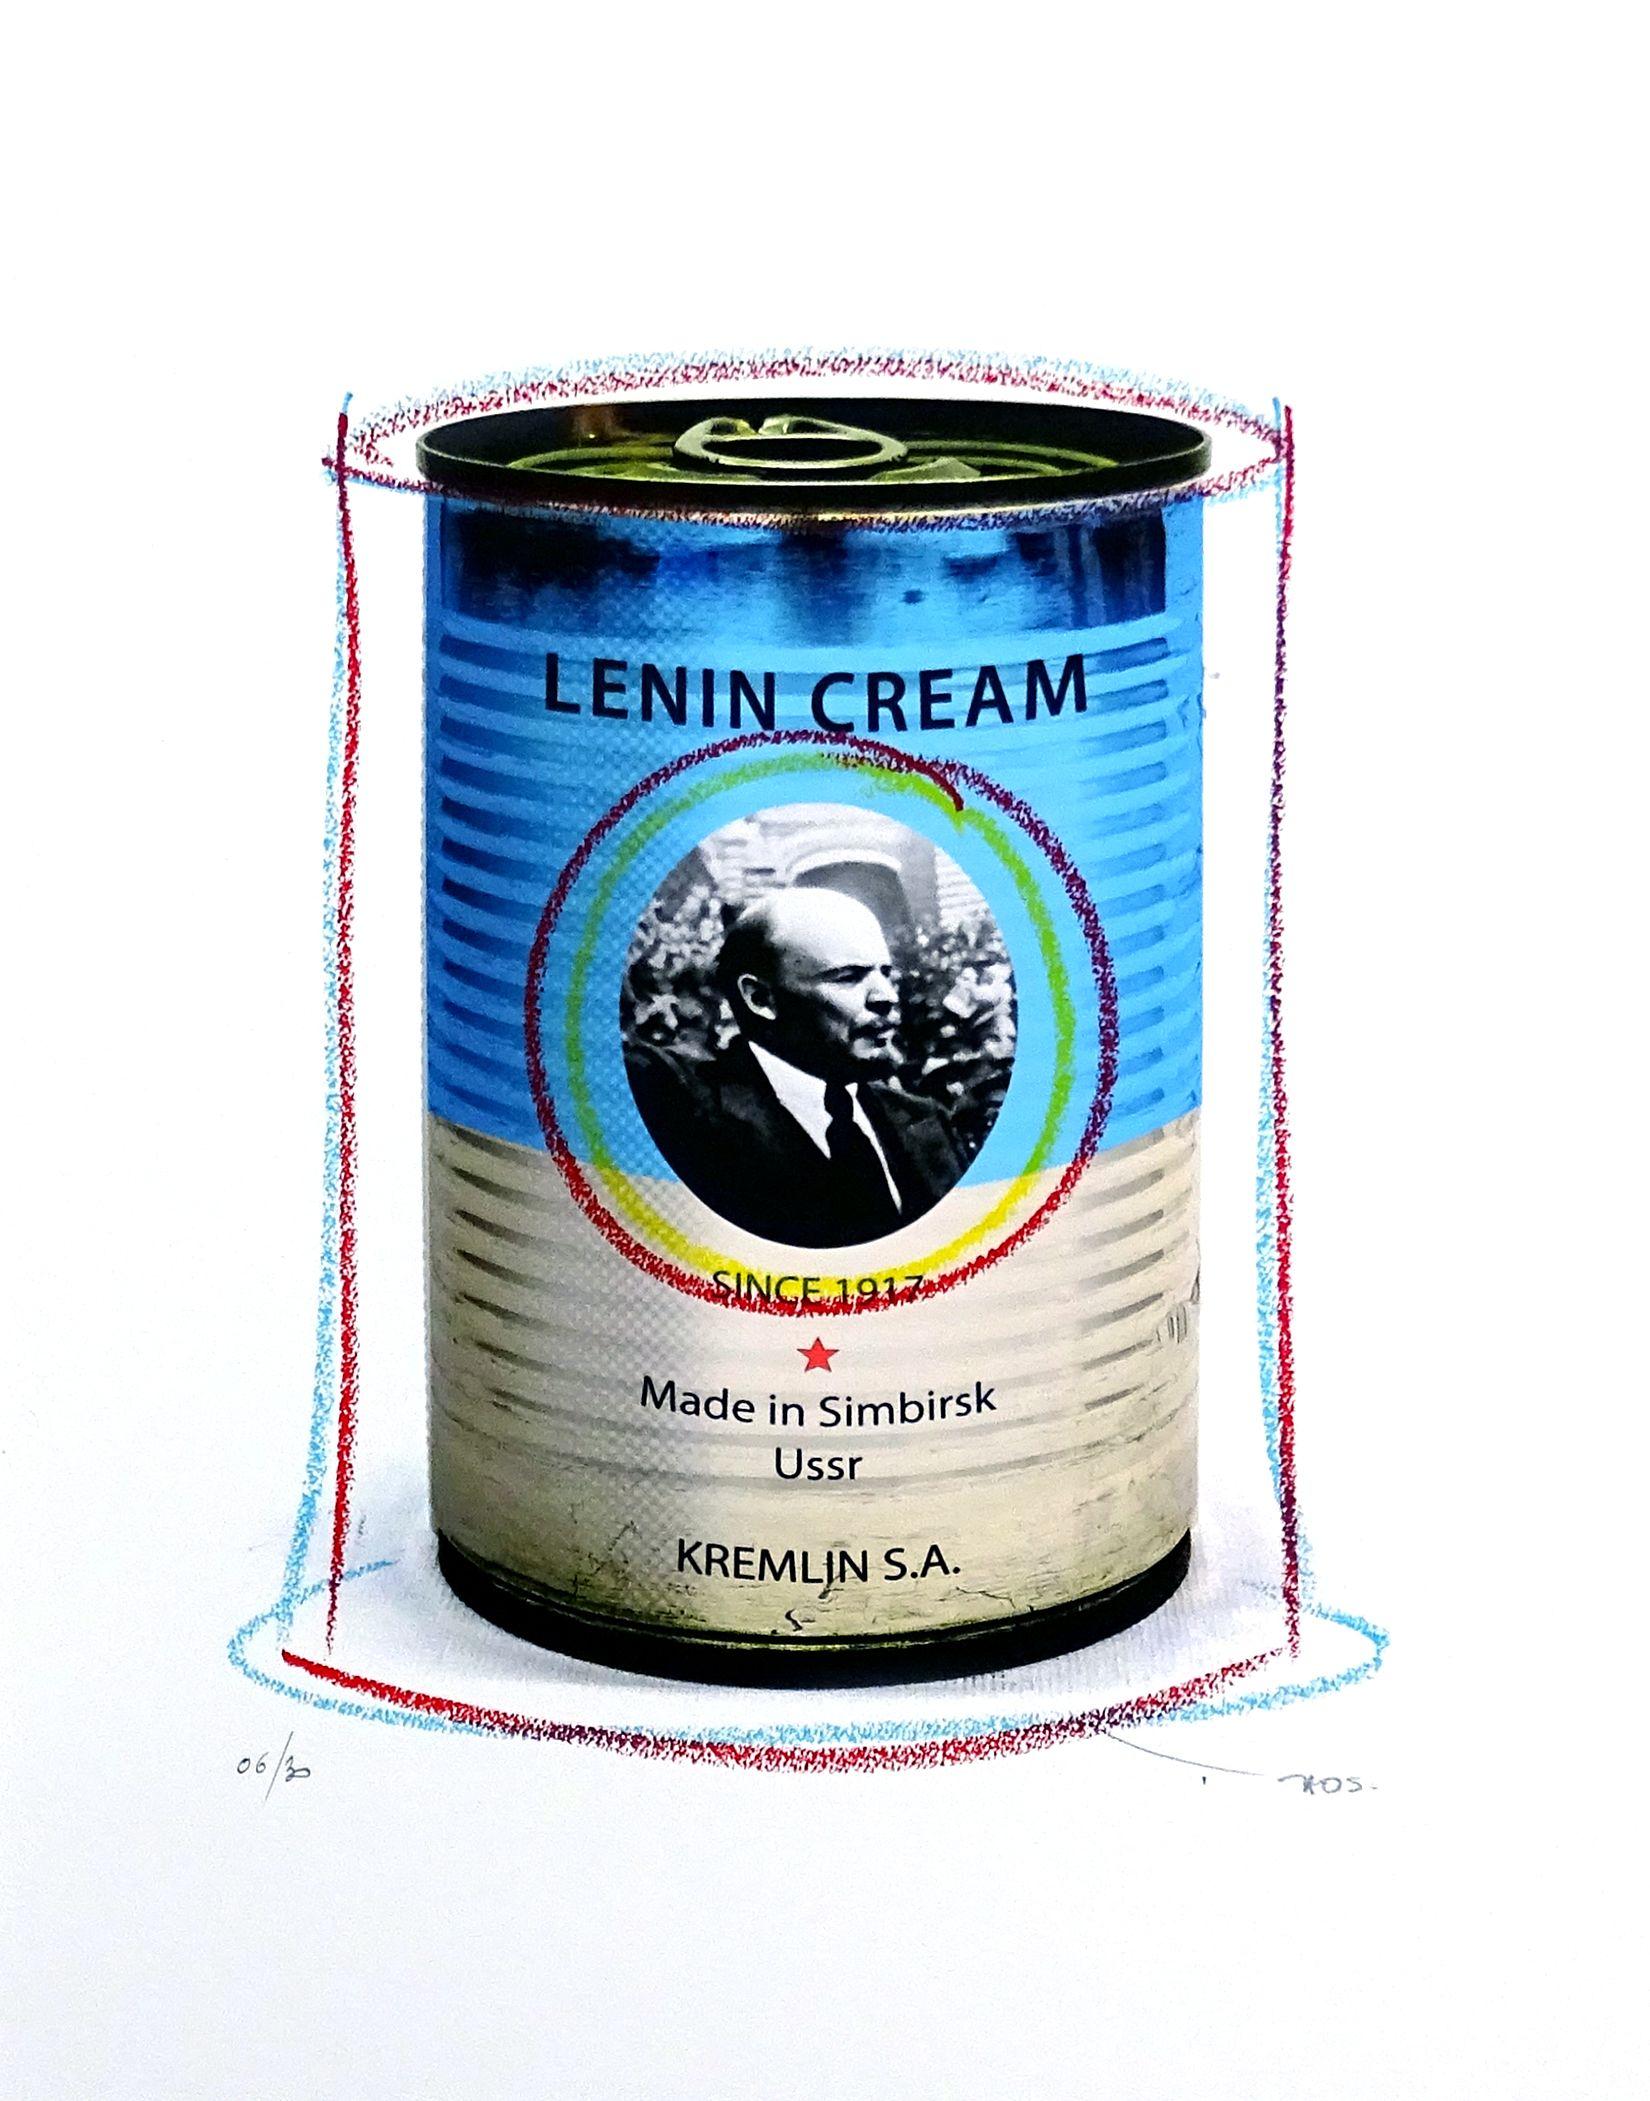 Tehos Lenin cream, Mixed Media on Paper